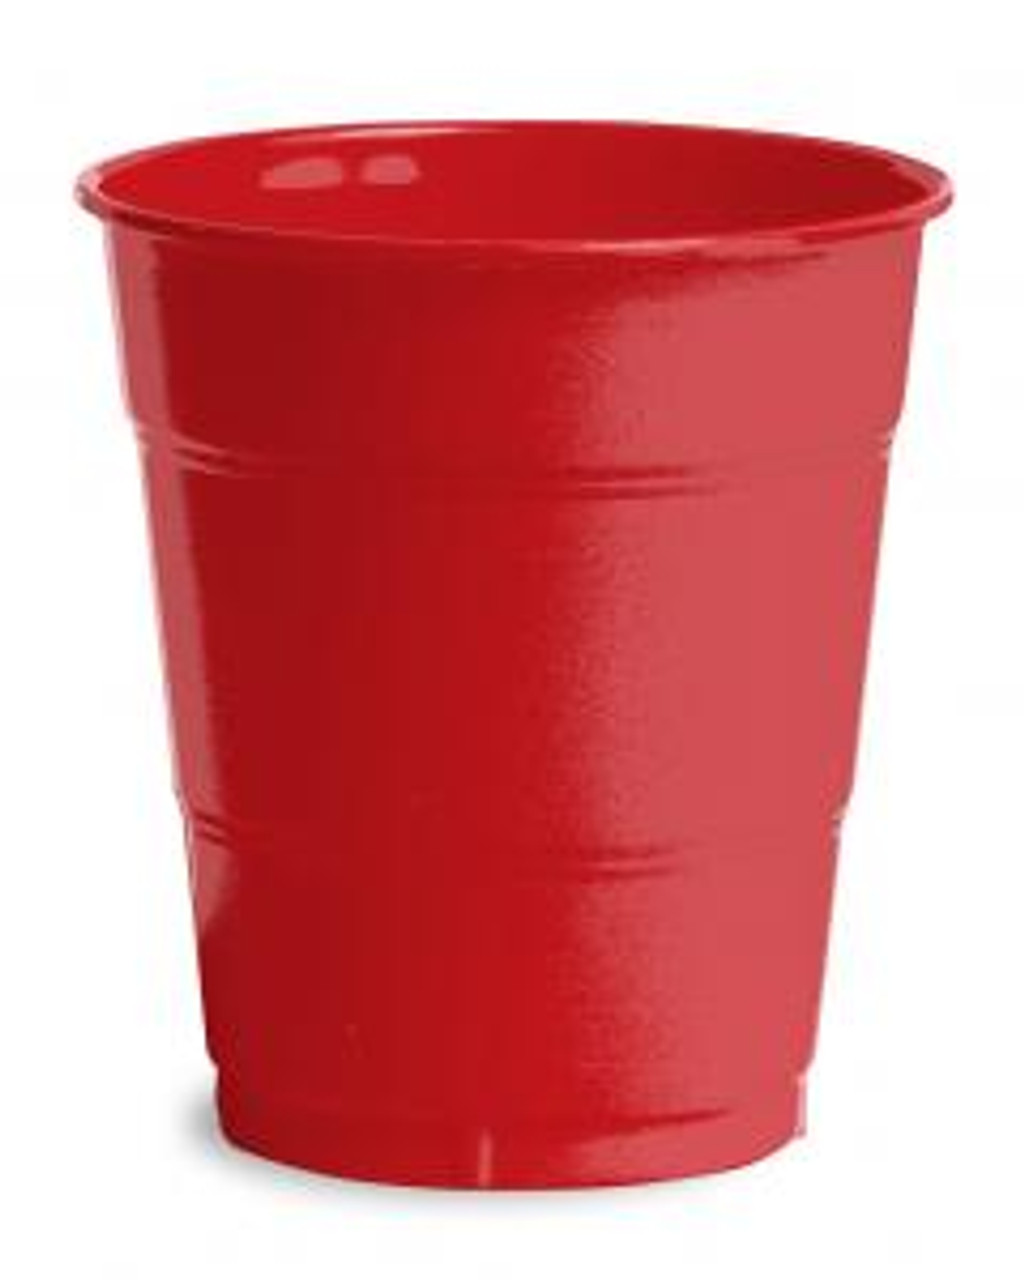 RED BEER CUPS 16OZ